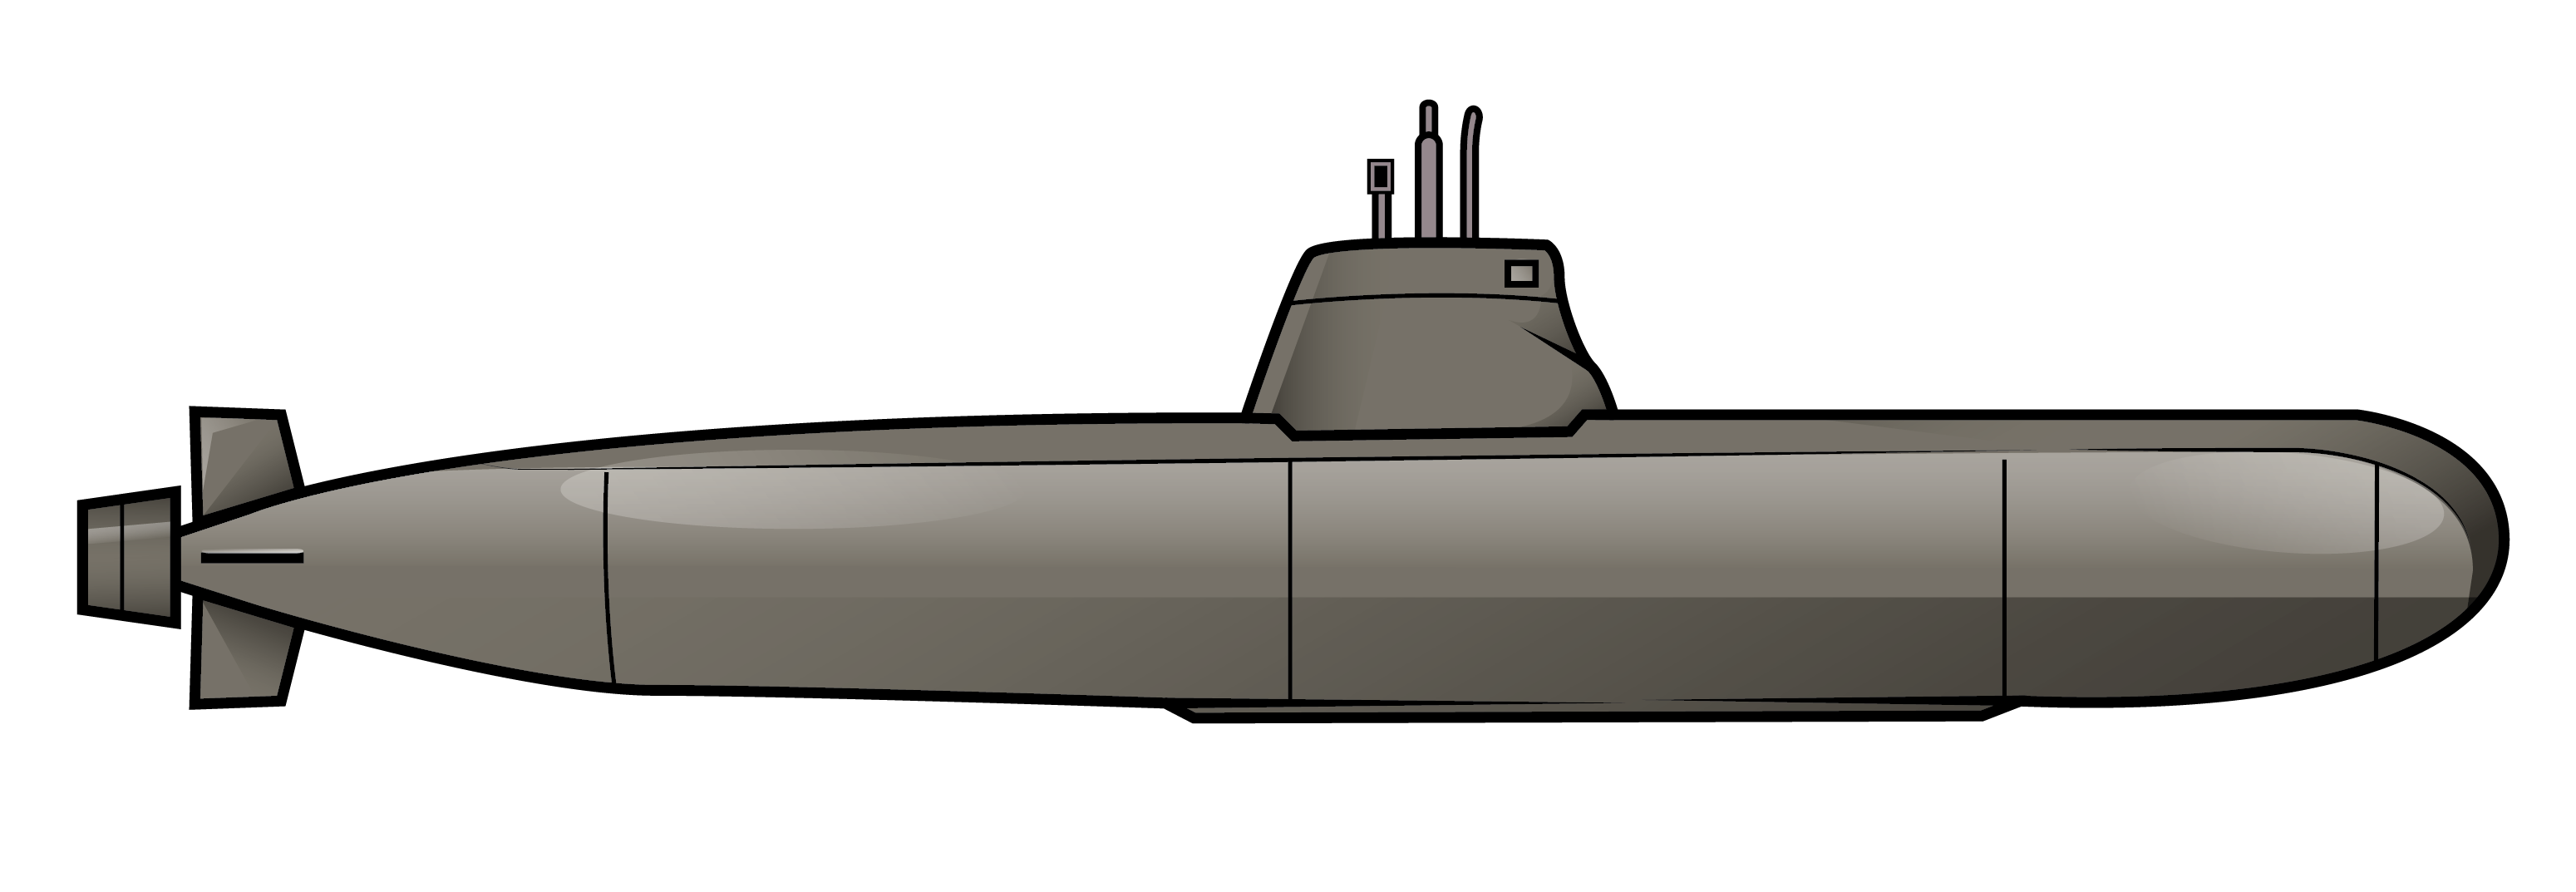 Navy Submarine Clipart Nice Submarine Clip Art